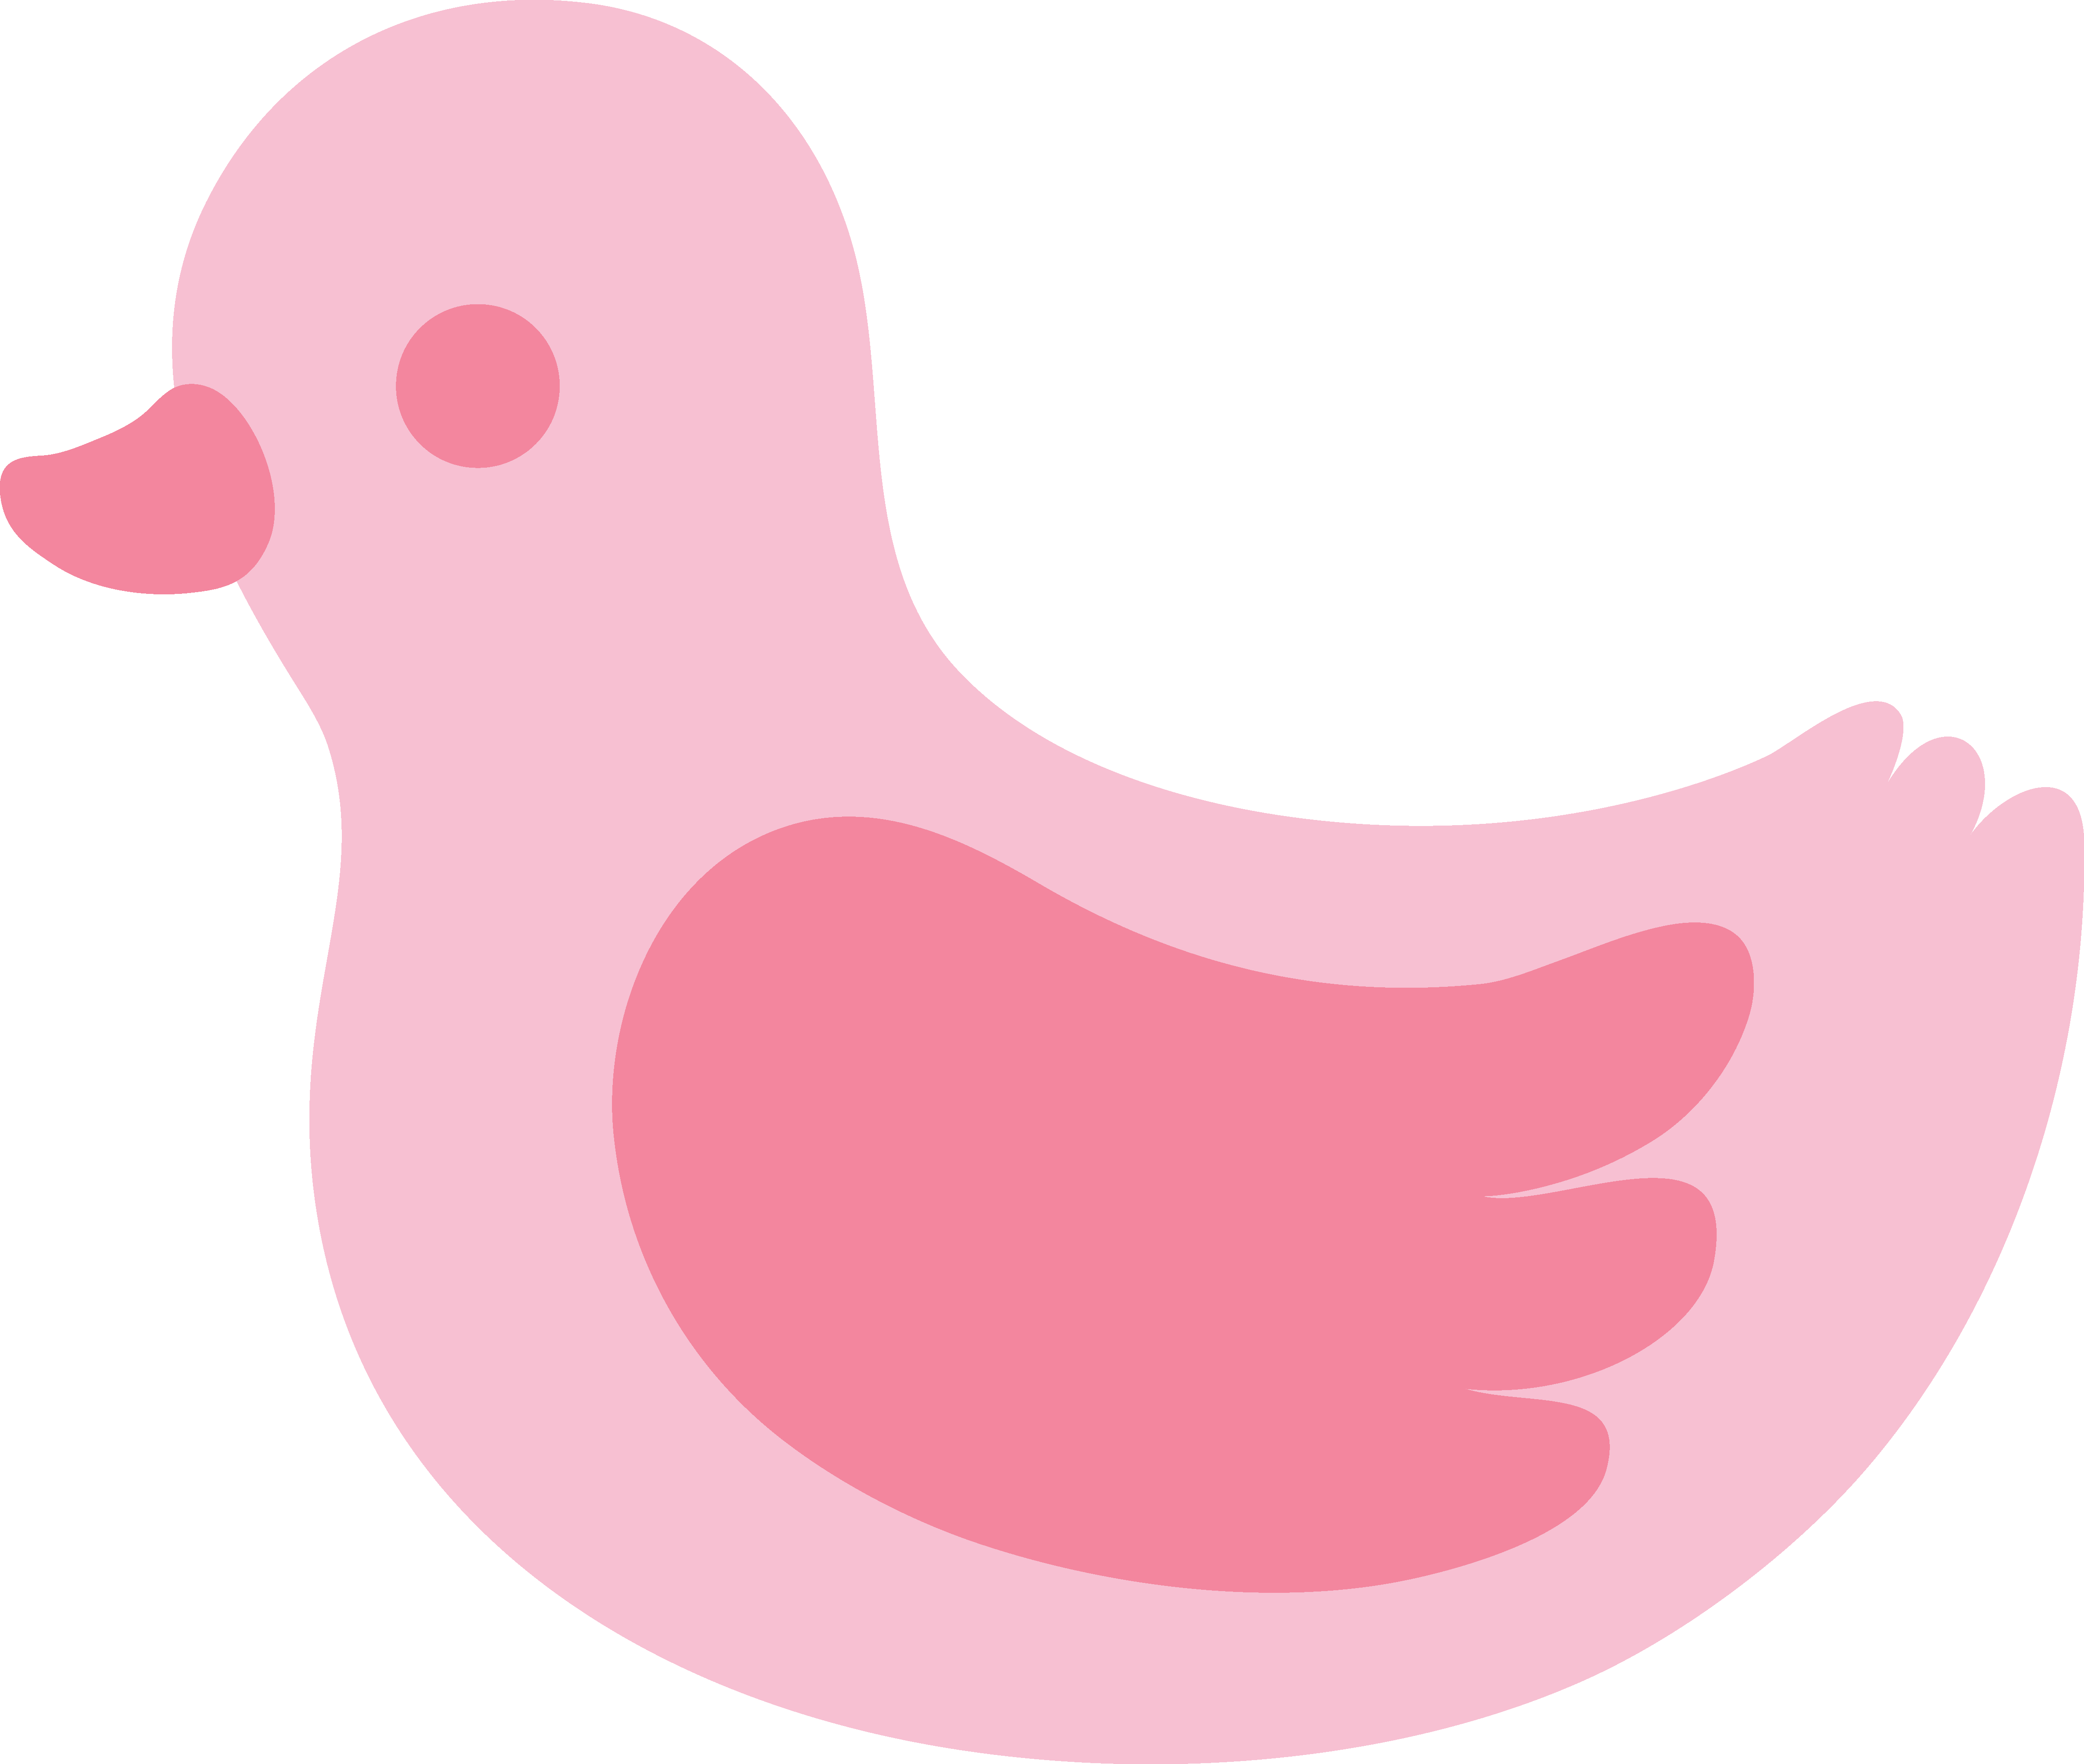 Baby Pink Duck - Free Clip Art